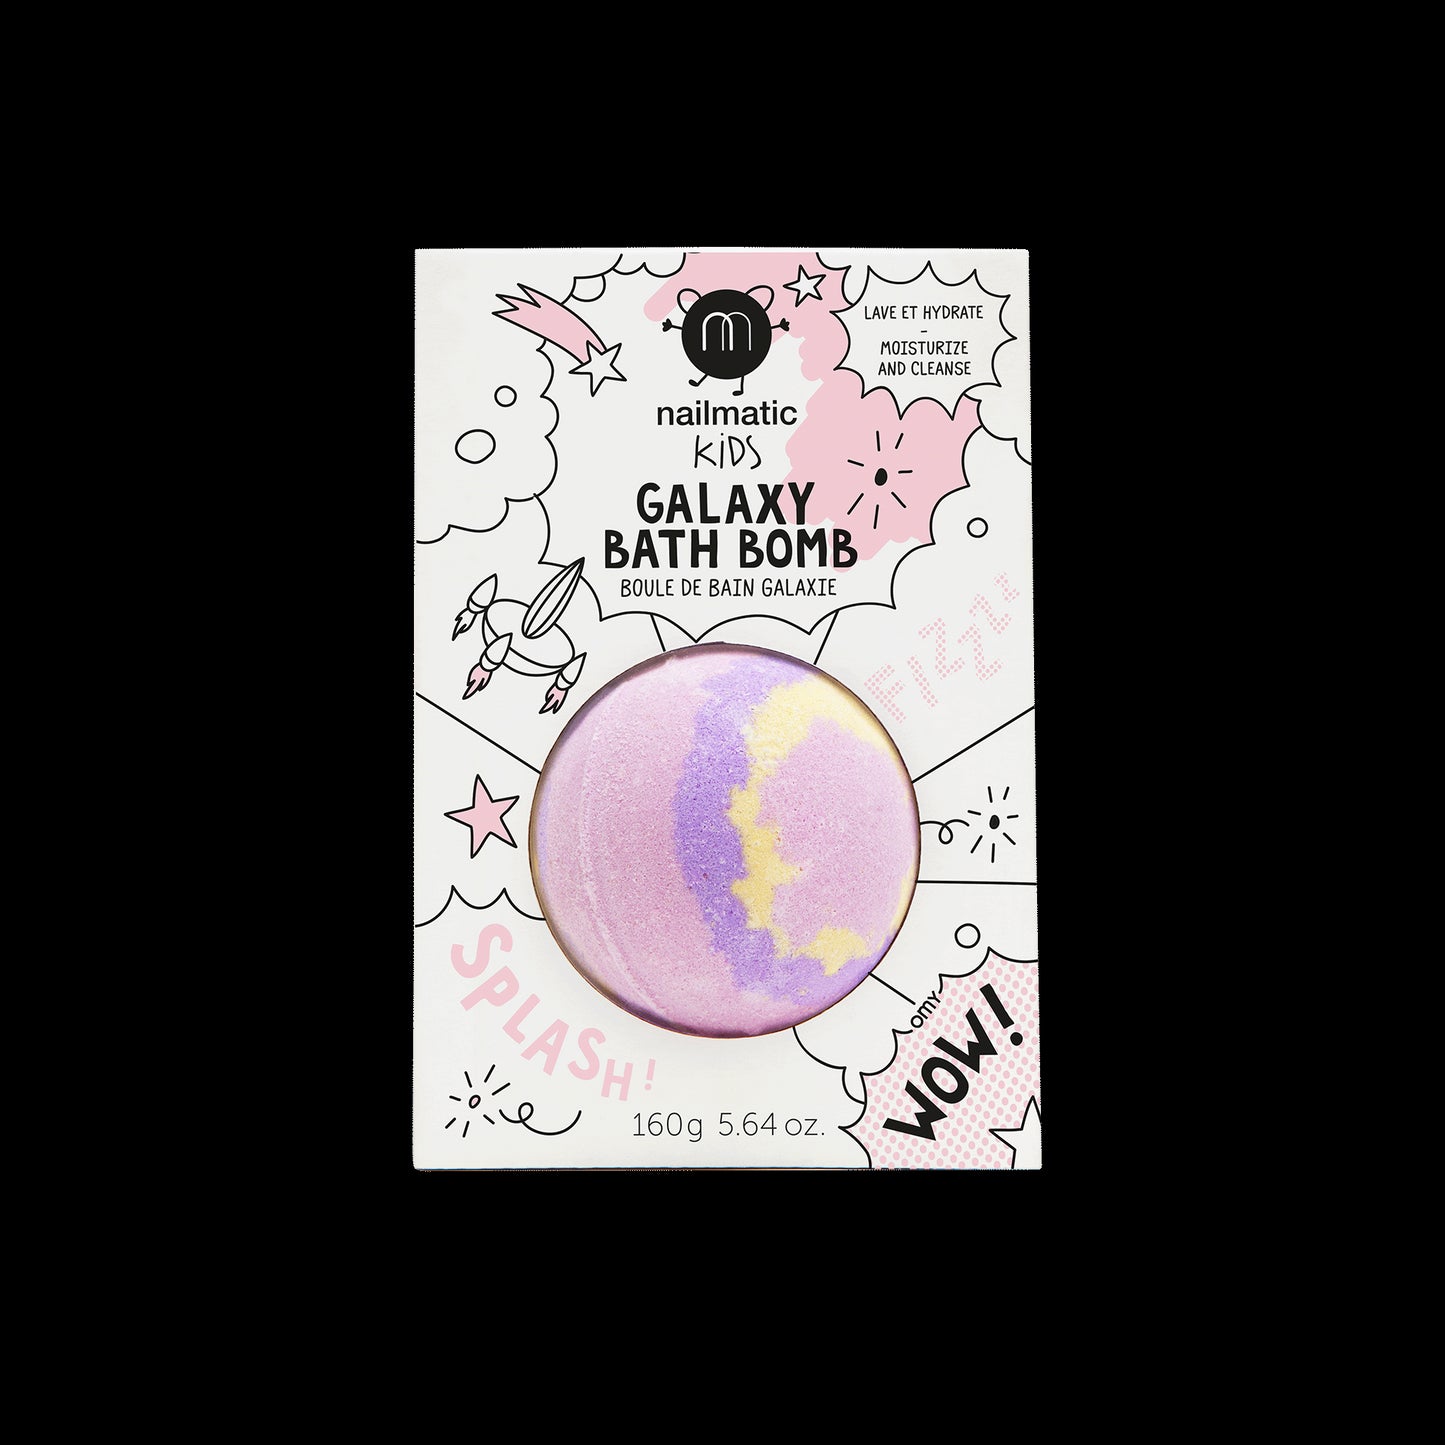 natural kids bath bomb supernova galaxy bath bomb with packaging nailmatic kids